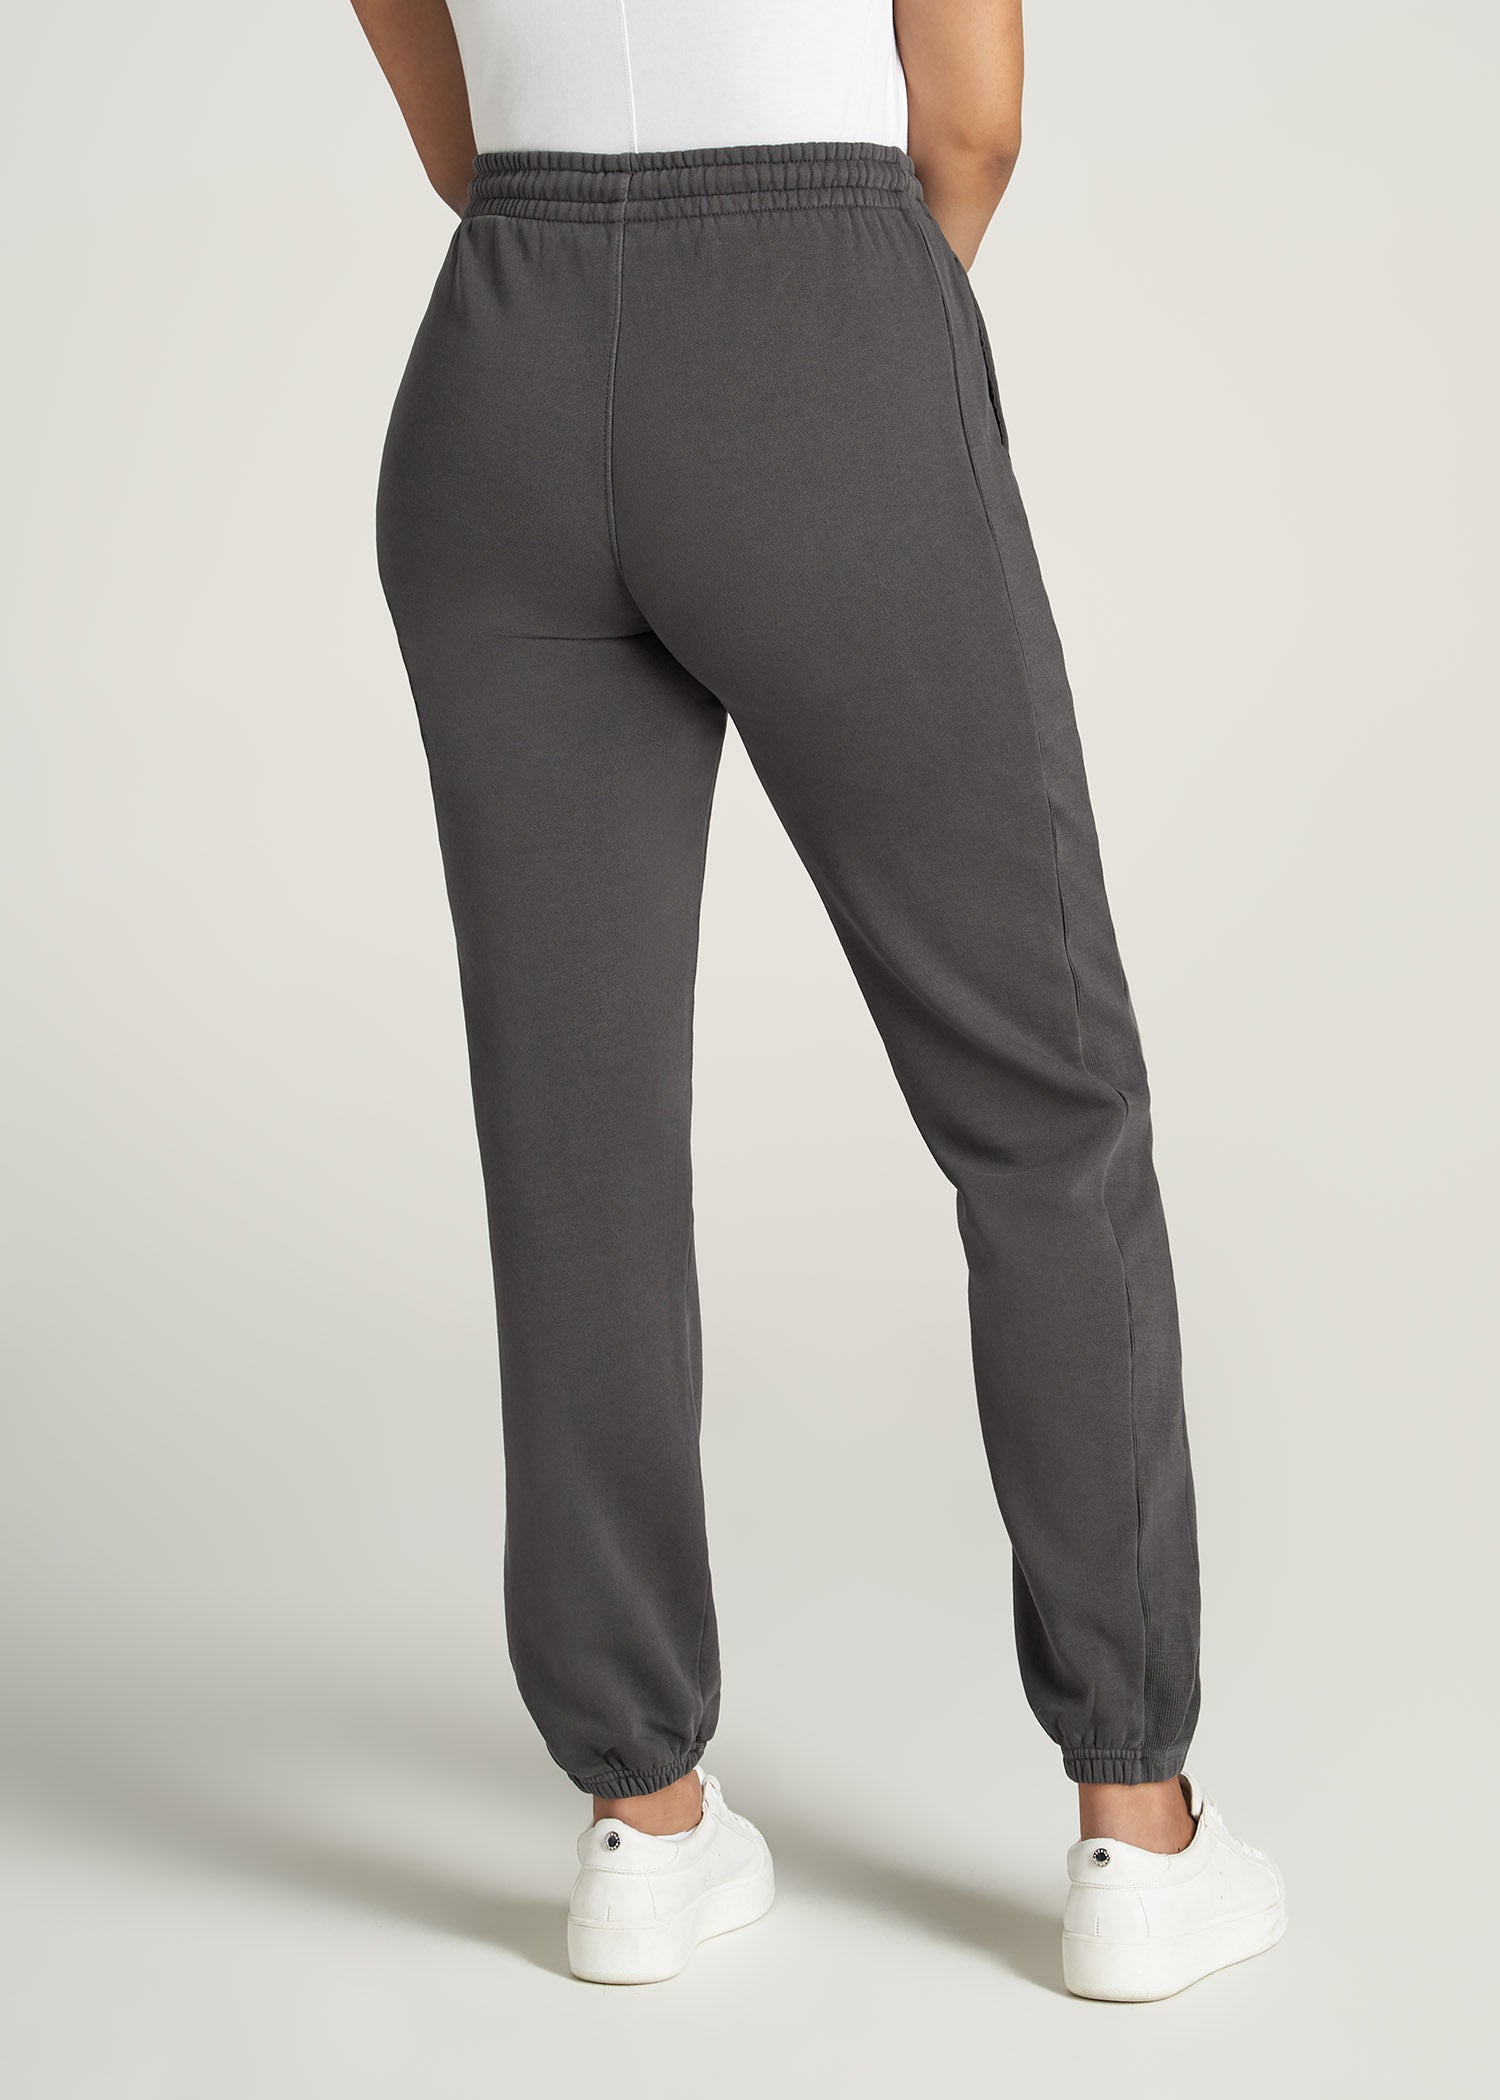 Women Pants High Waist Sports Trousers Closed Bottom Sweatpants, Thick,  White, XL